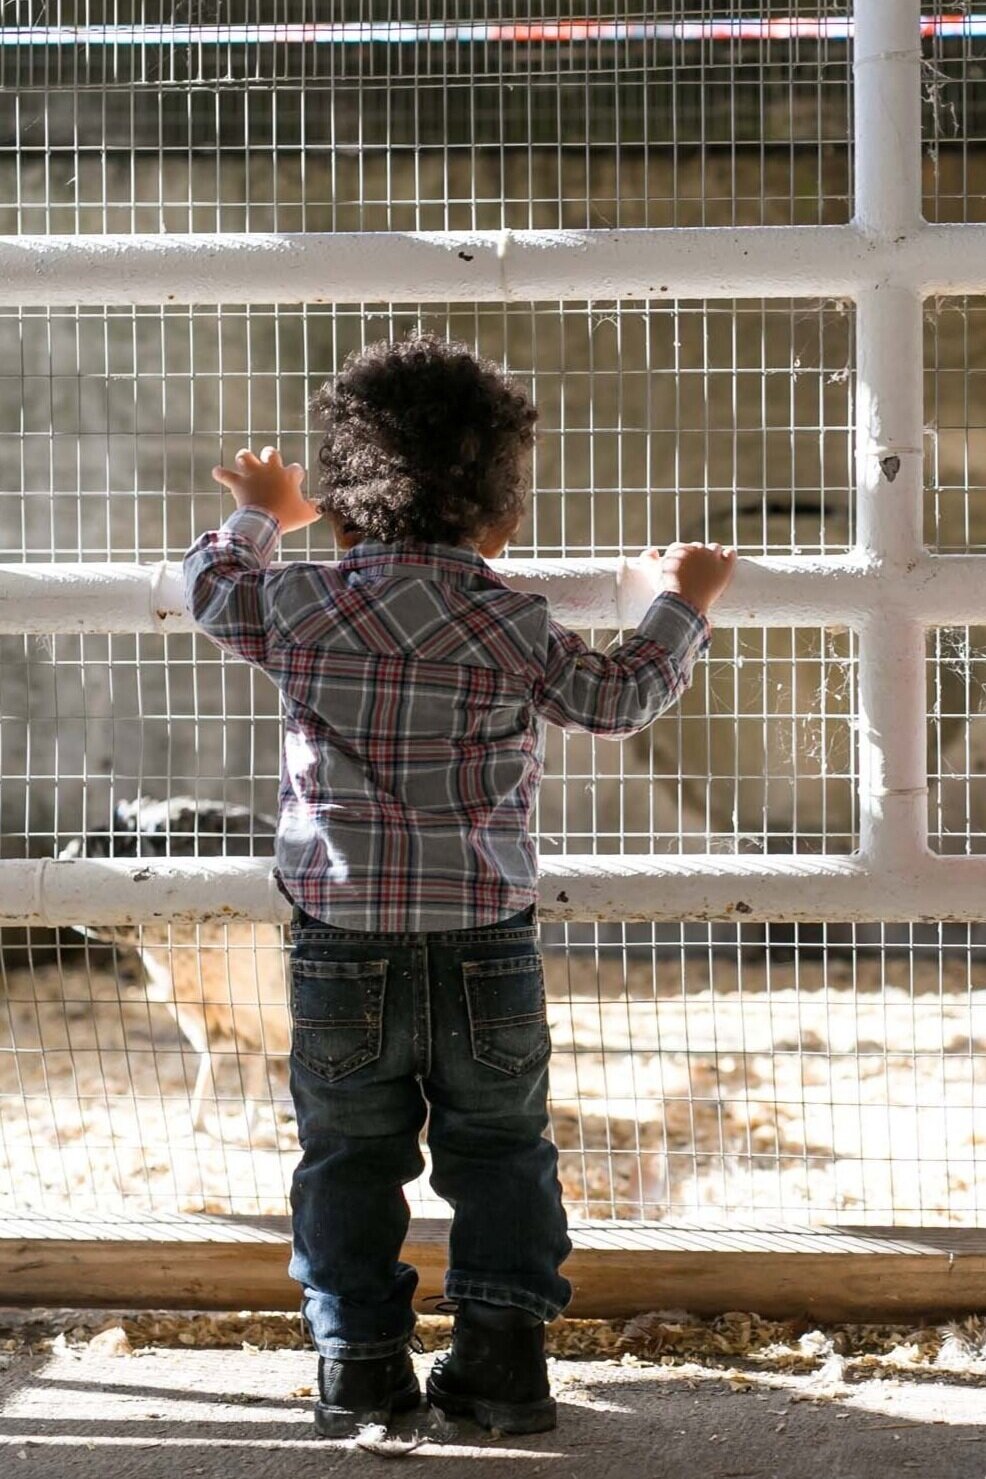 Little Boy Grabbing Animal Cage Looking at Farm Animals